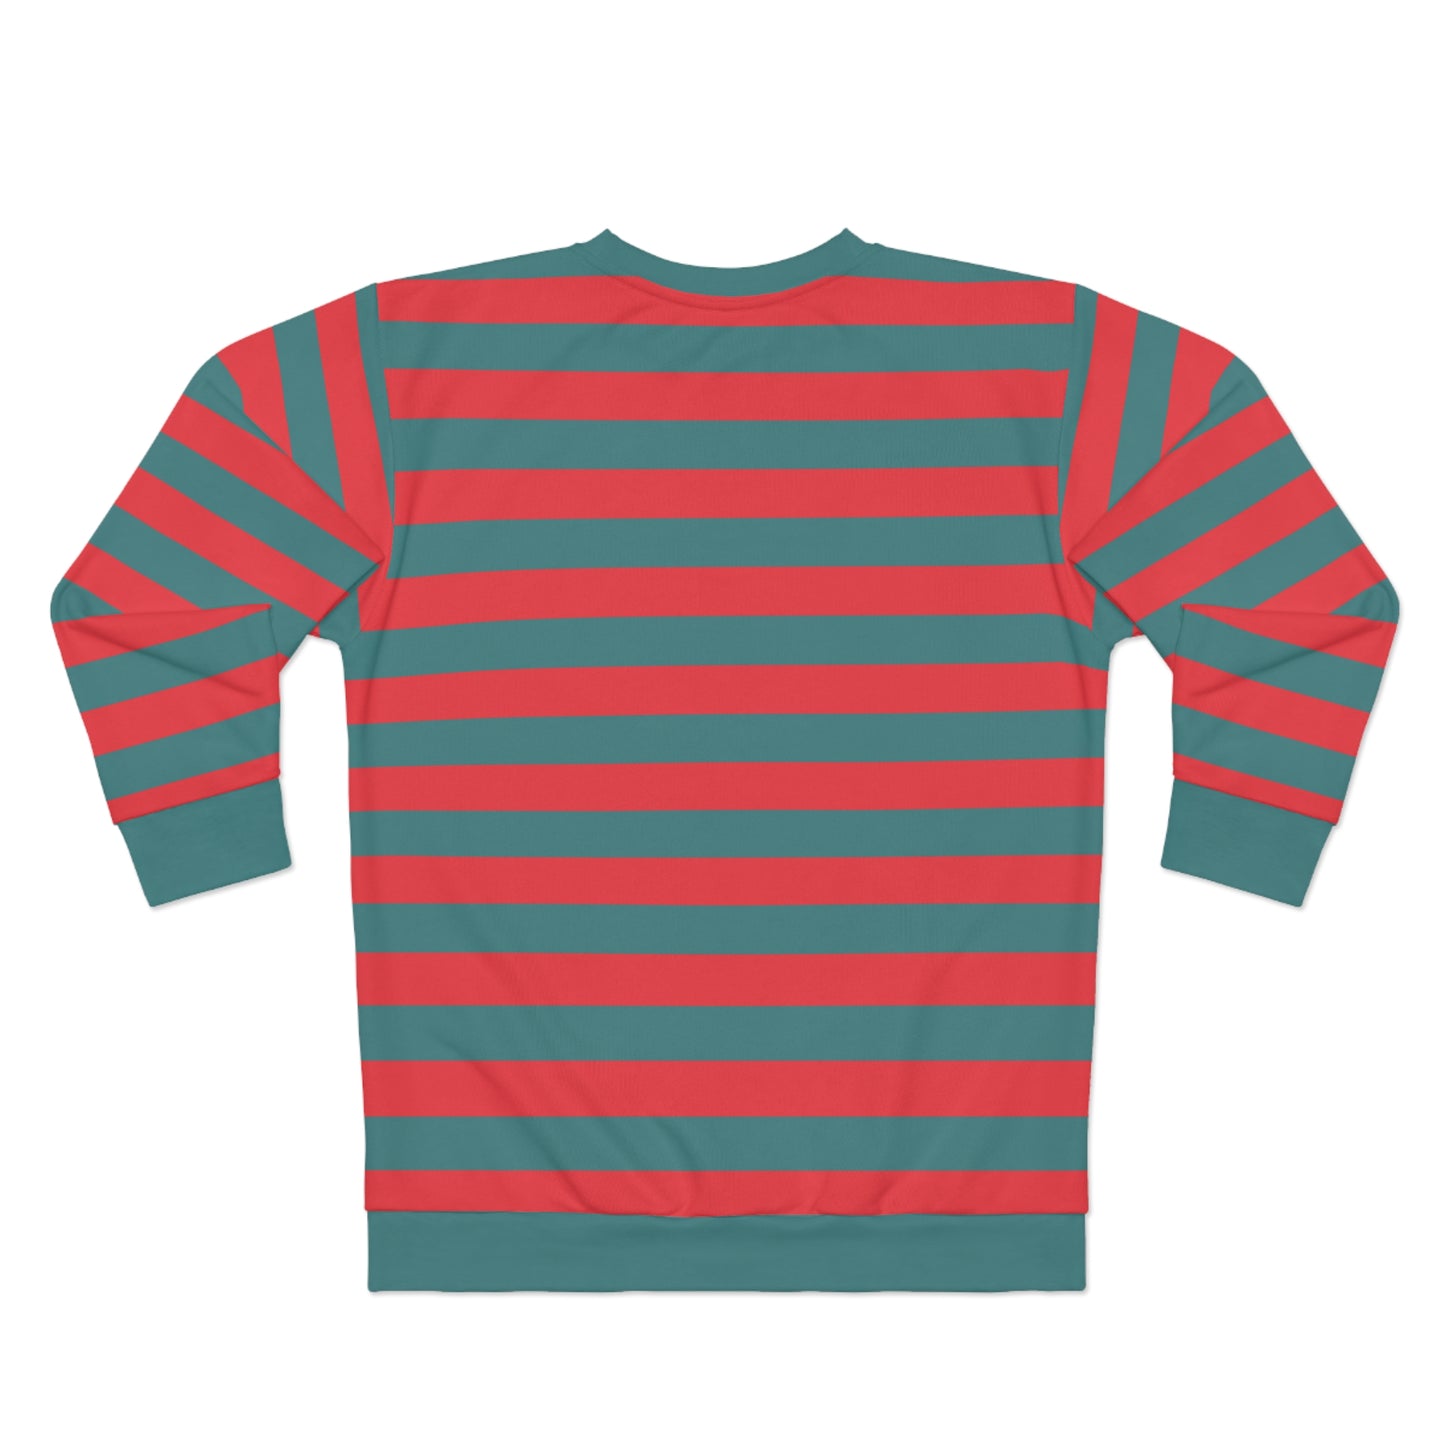 Green and Red Striped Sweatshirt, Graphic Crewneck Fleece Cotton Sweater Jumper Pullover Men Women Adult Aesthetic Designer Top